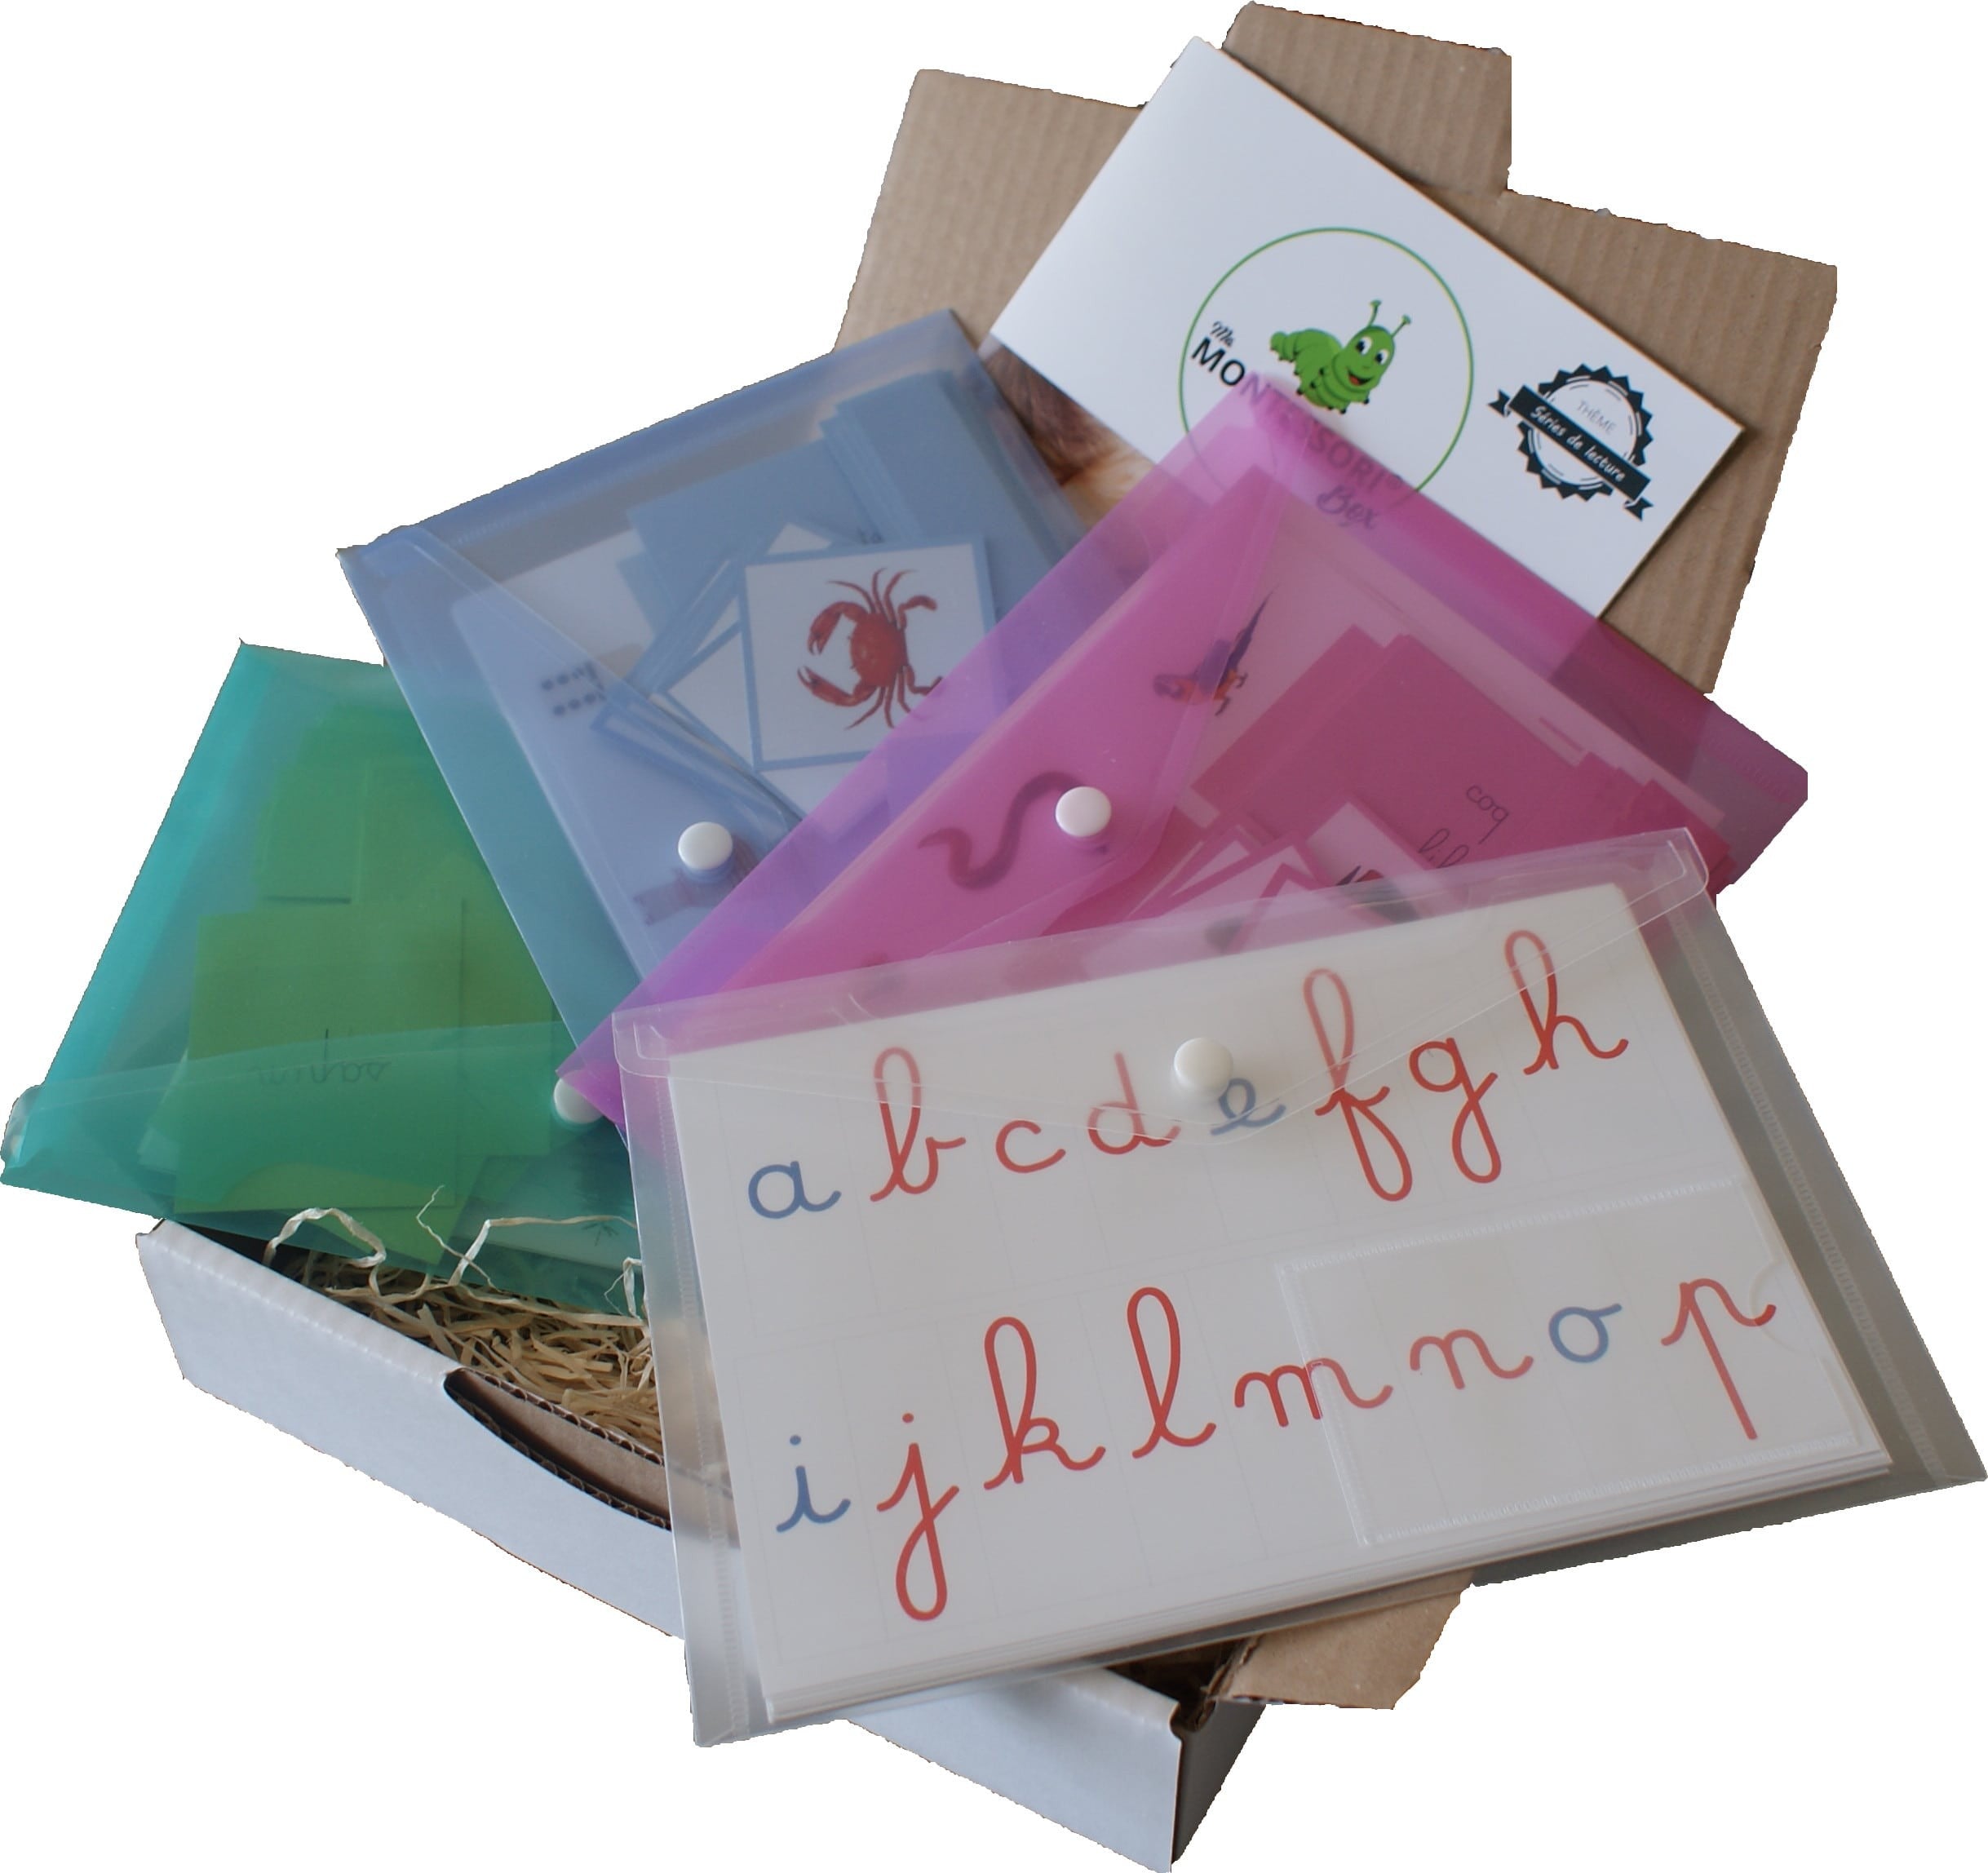 Séries de Lecture Montessori Cursives - MaMontessoriBox